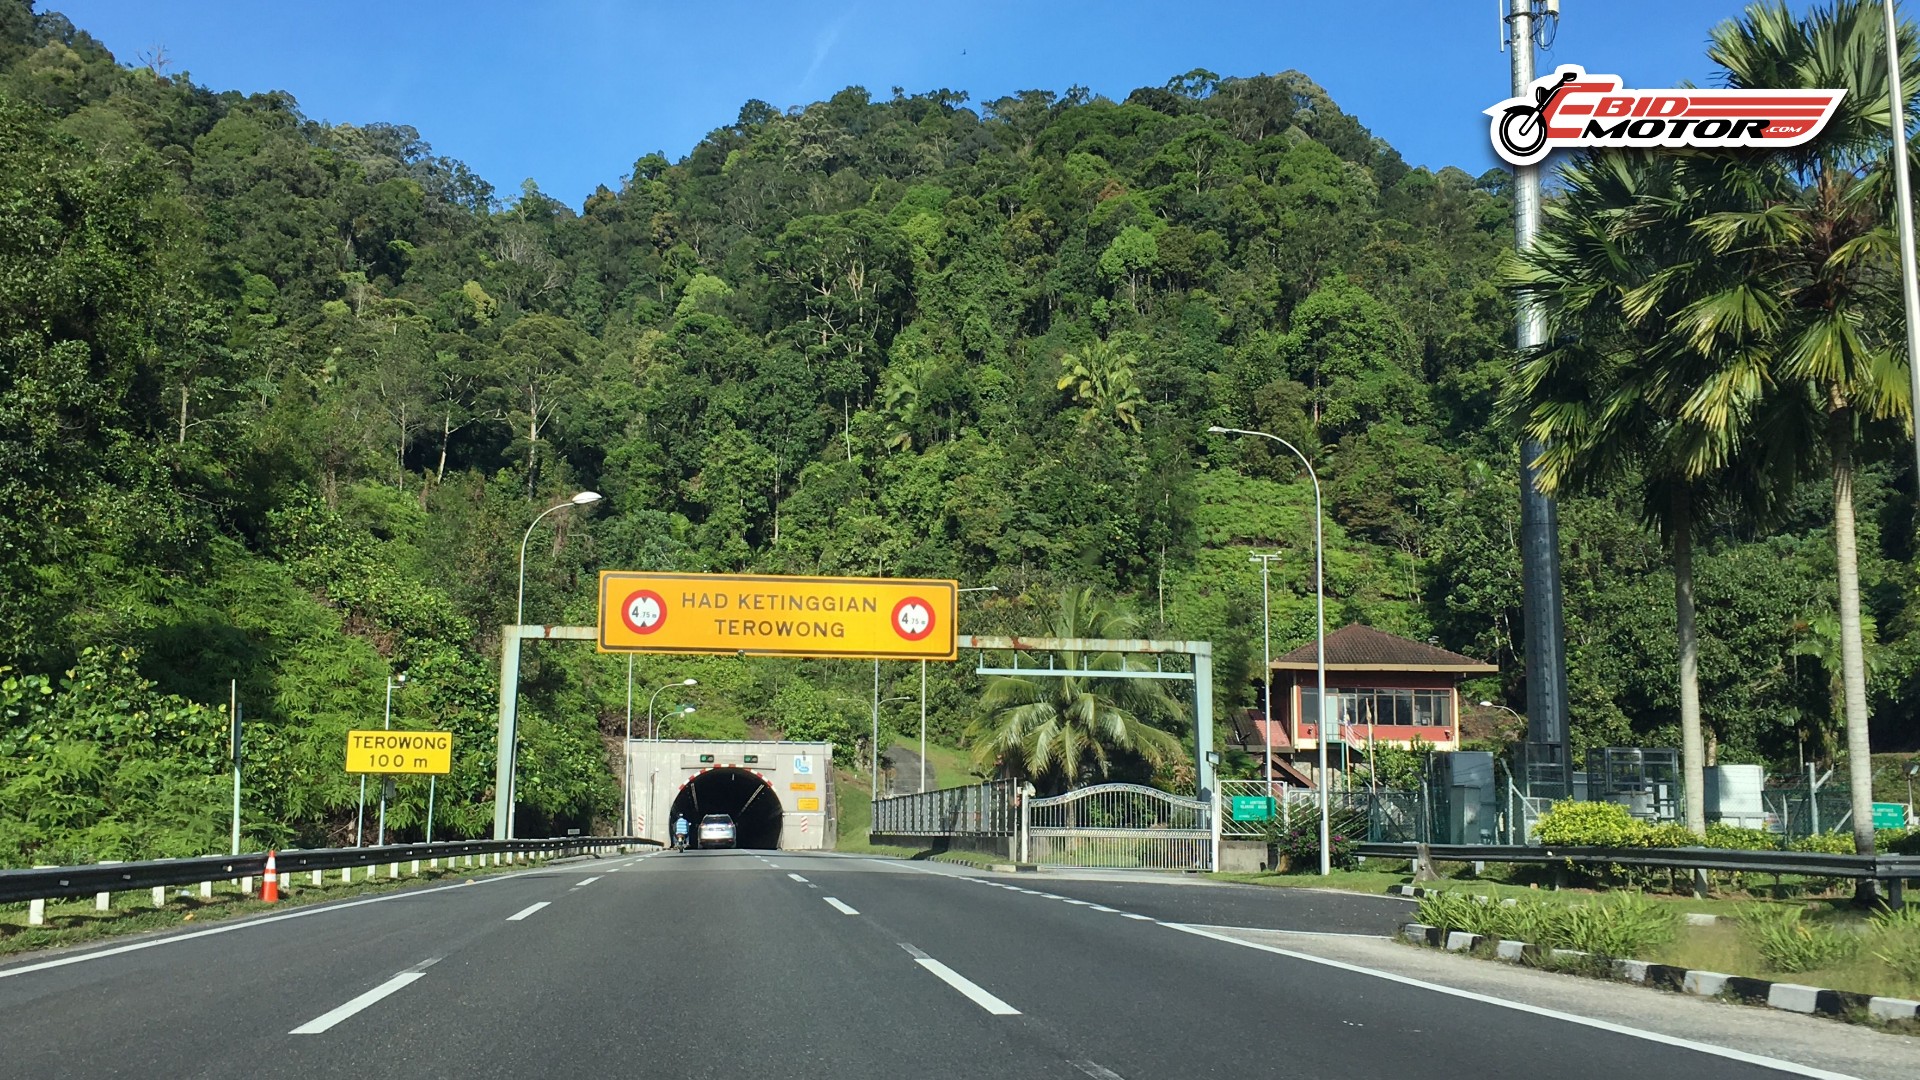 Pembinaan Lebuh Raya Pintasan Terowong Menora Diluluskan Kerajaan Negeri Perak! Ini Fakta Laluan Baharu Tersebut!